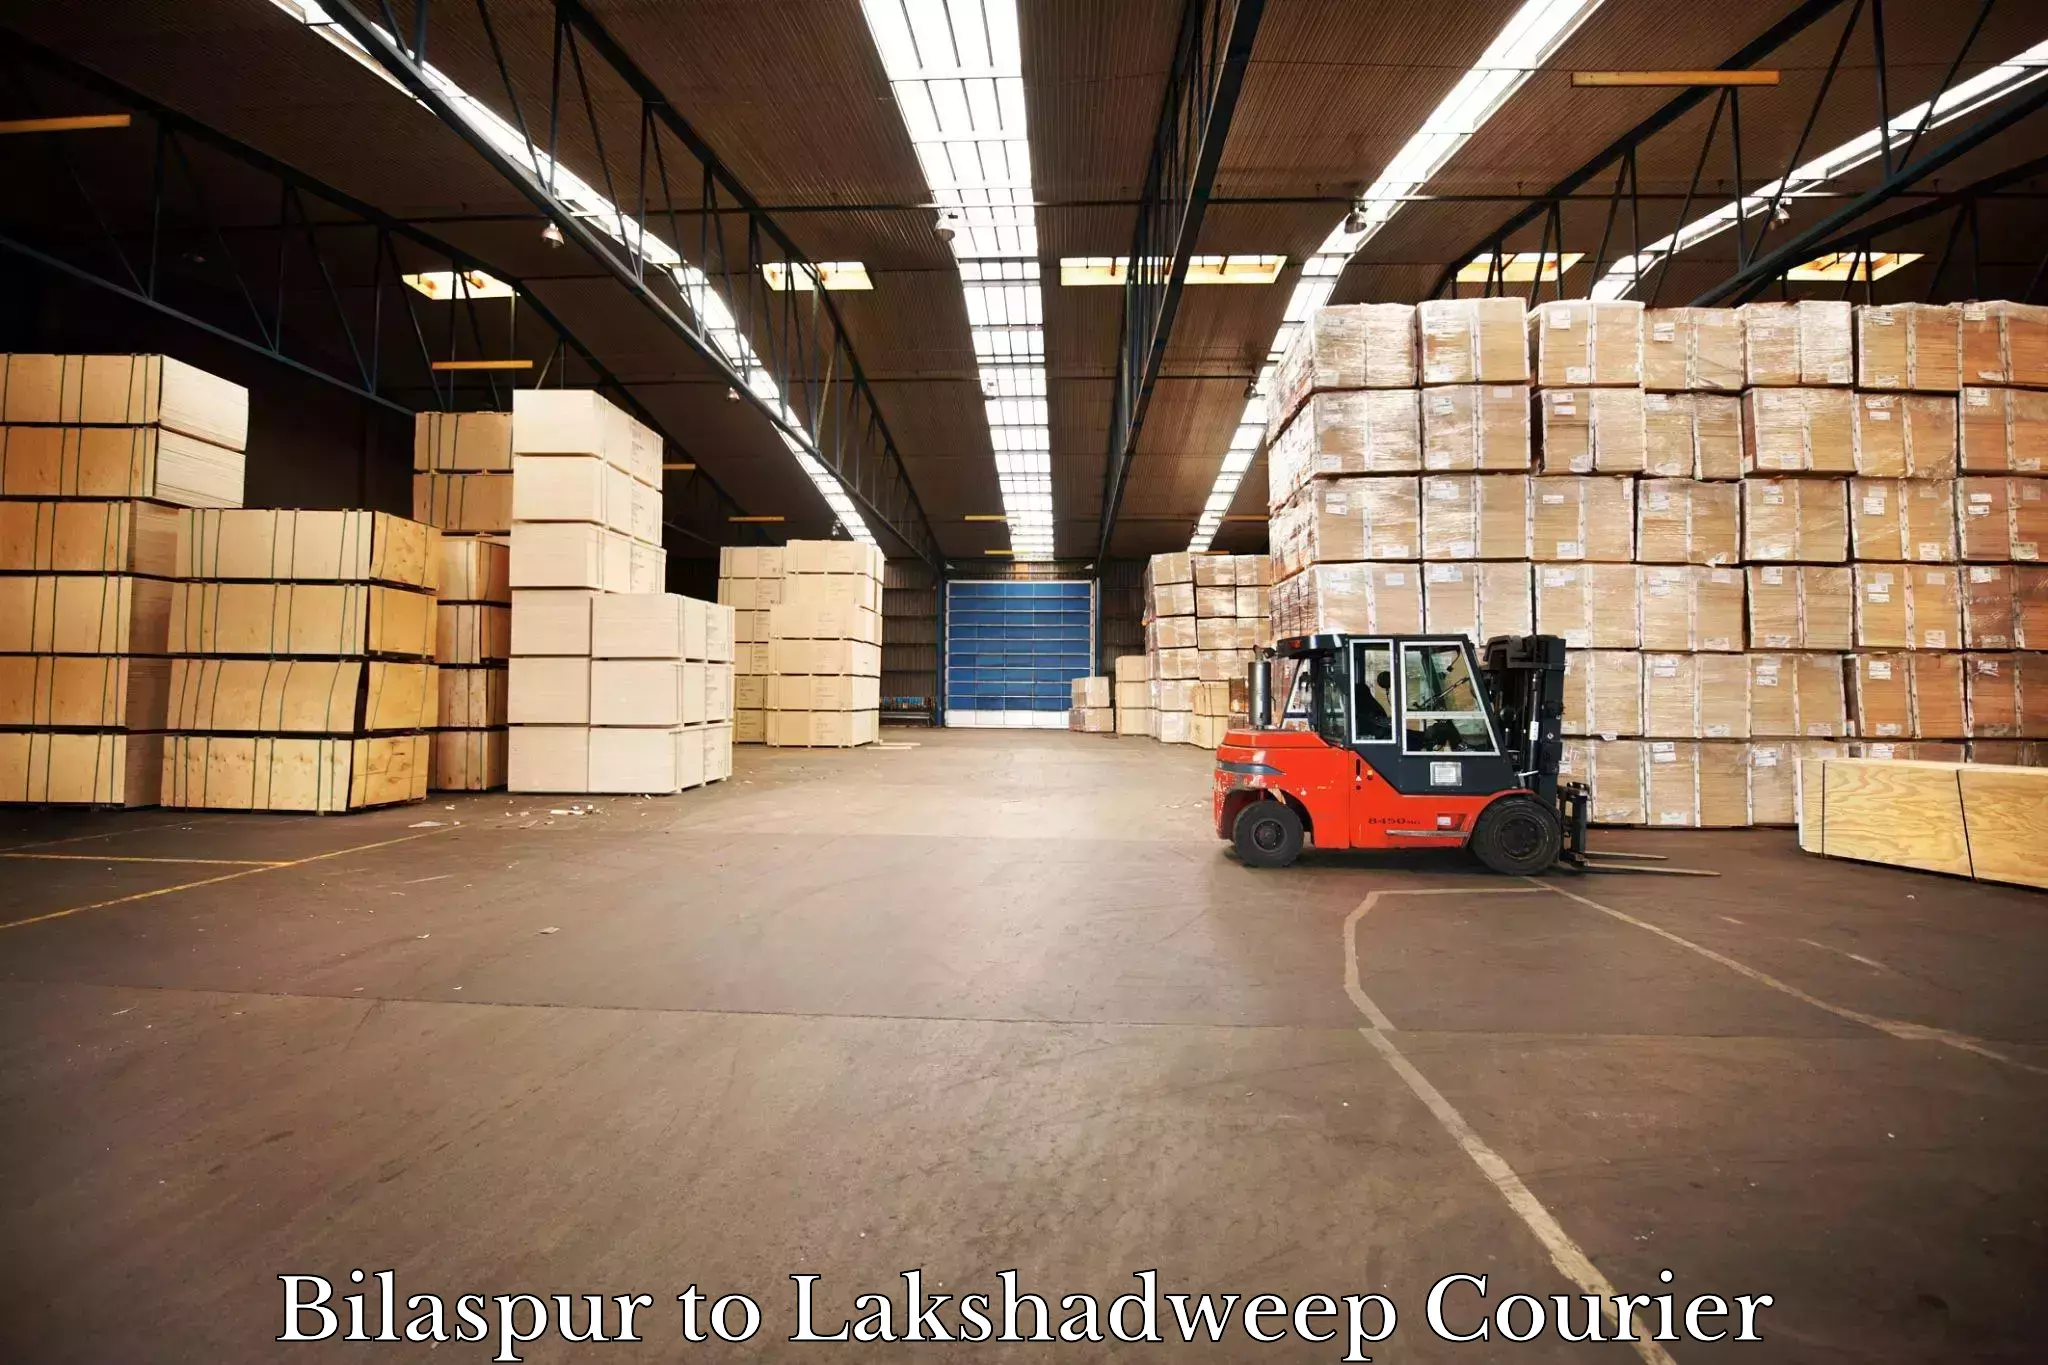 Courier service comparison Bilaspur to Lakshadweep